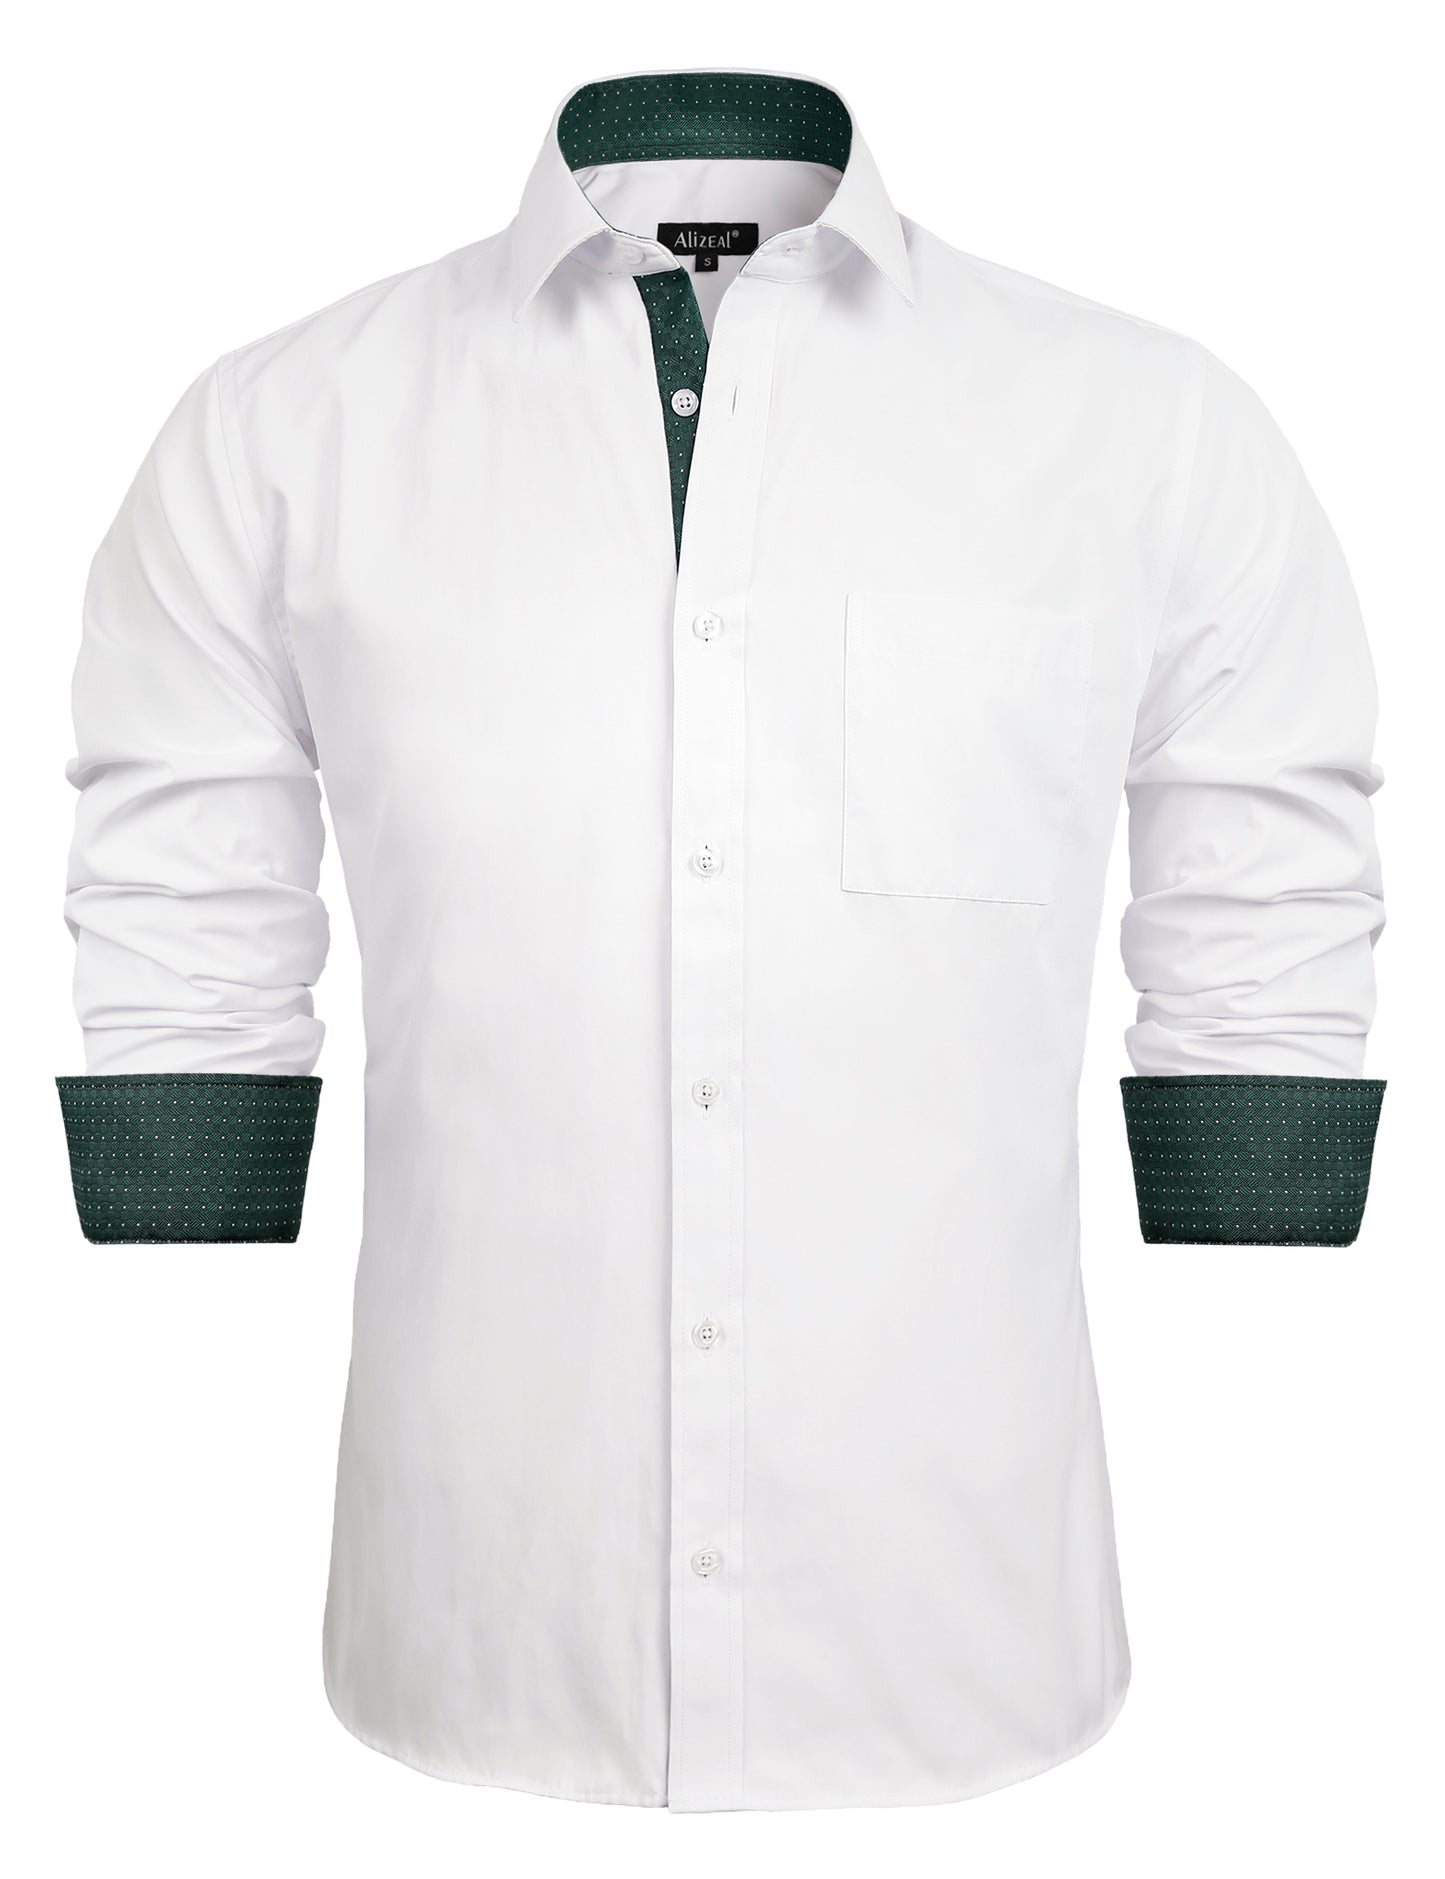 Men's Long Sleeve Dress Shirts Polka Dot Patchwork Button Down Formal Shirts, 116-White+Dark Green Dots